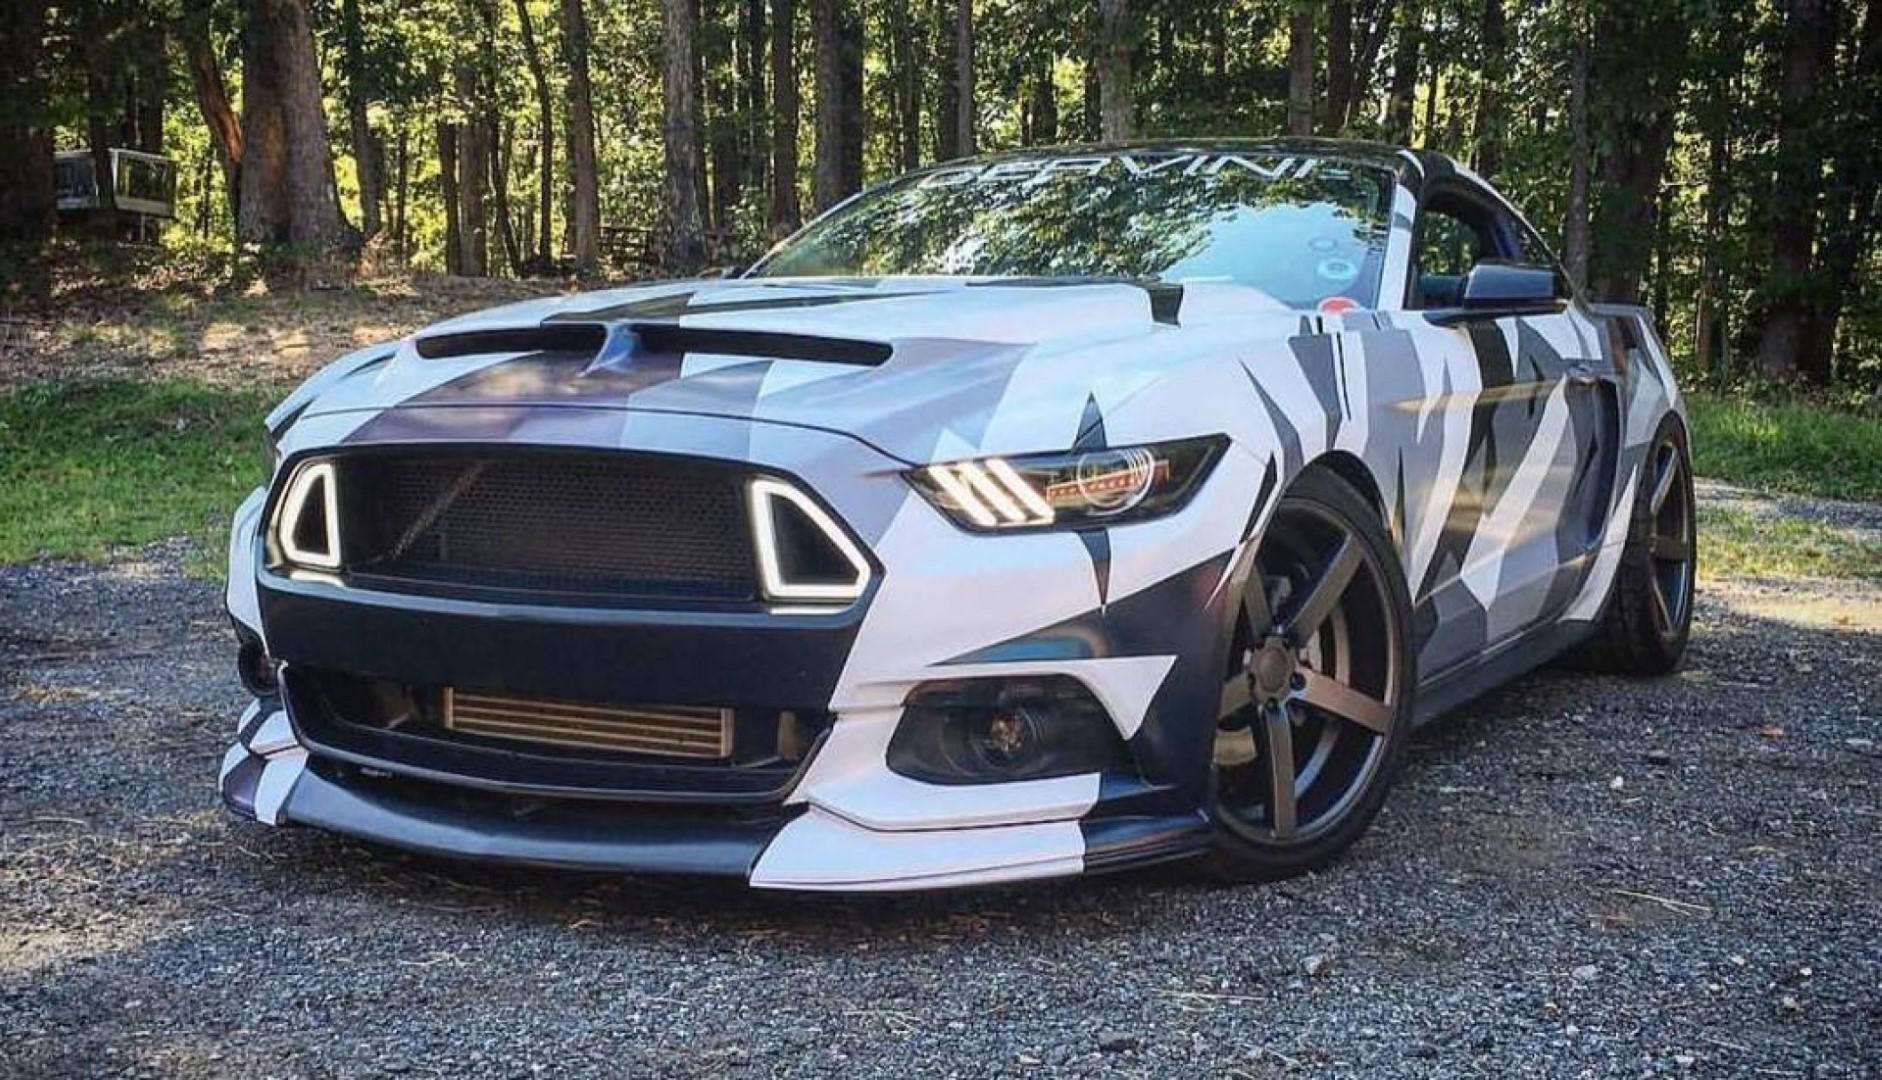 Un camouflage grisonnant couvre la Ford Mustang !